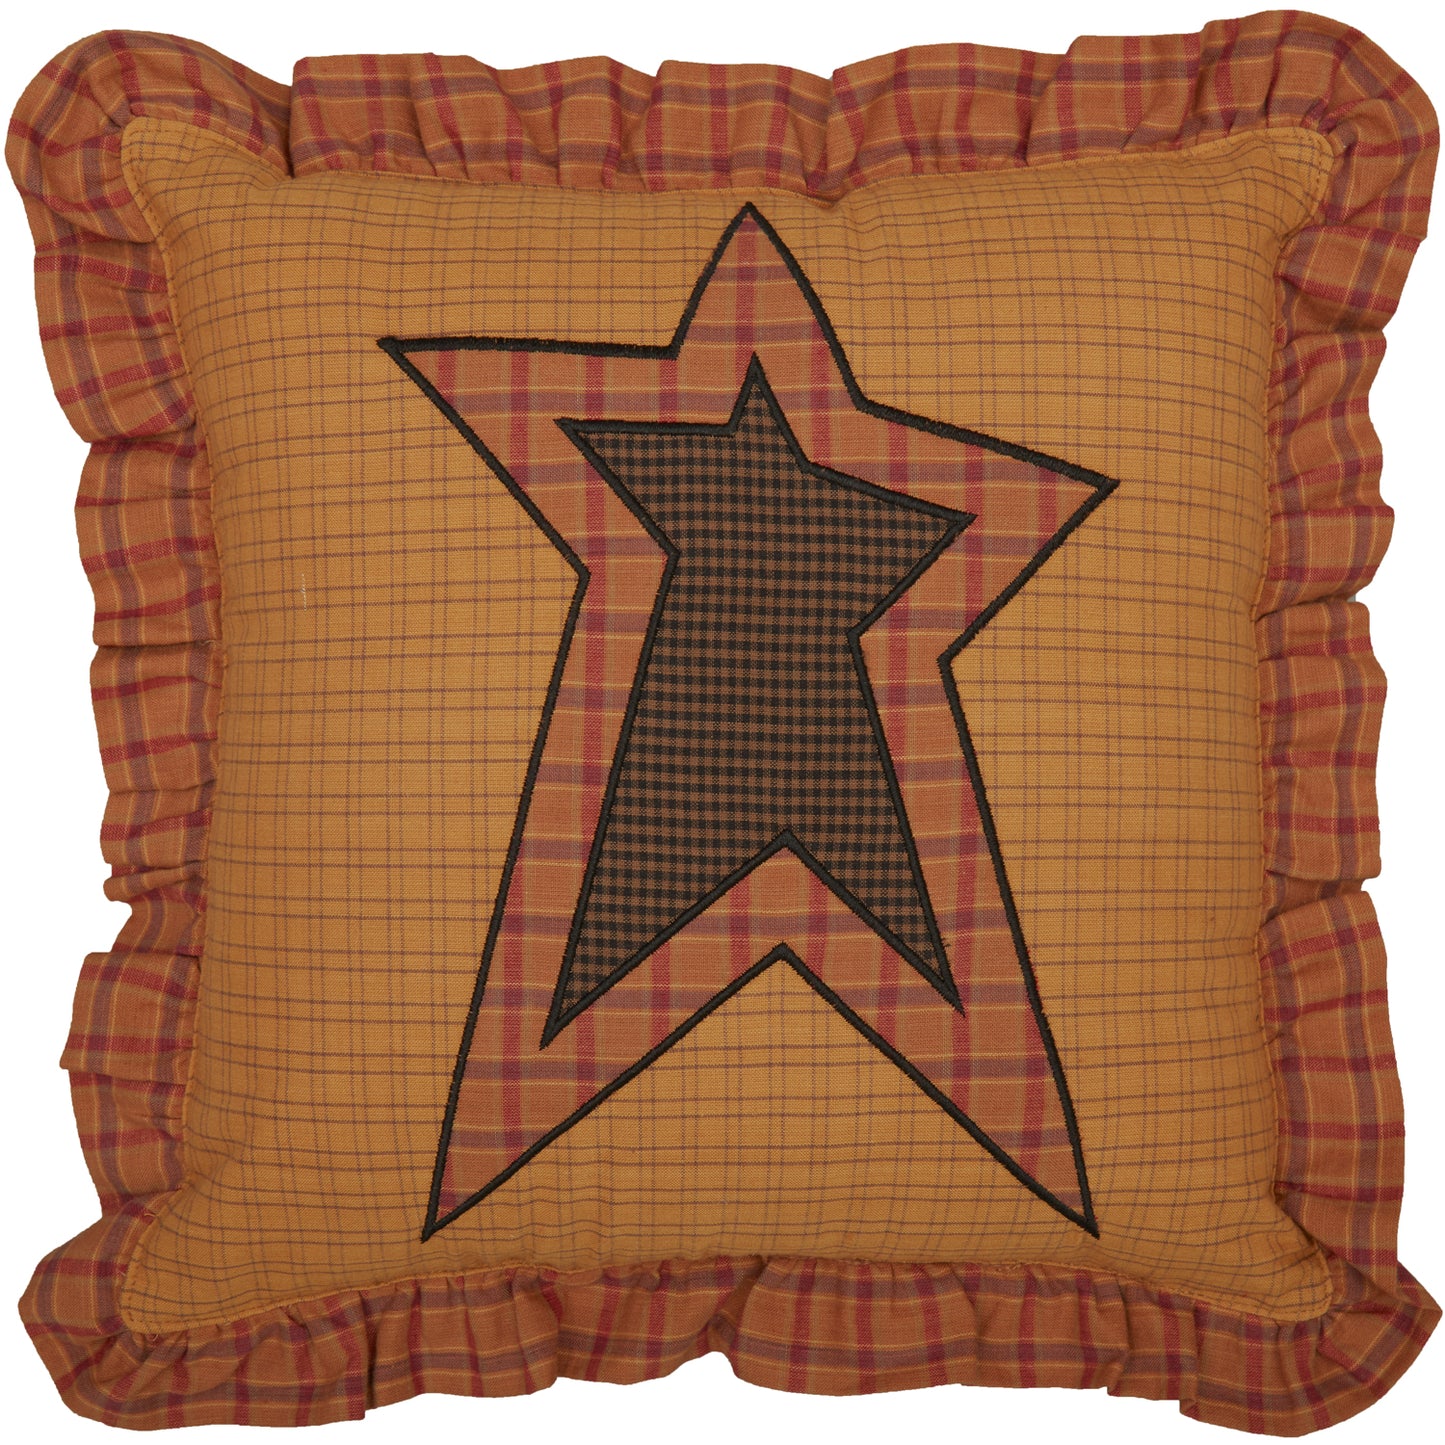 56781-Stratton-Applique-Star-Pillow-12x12-image-4